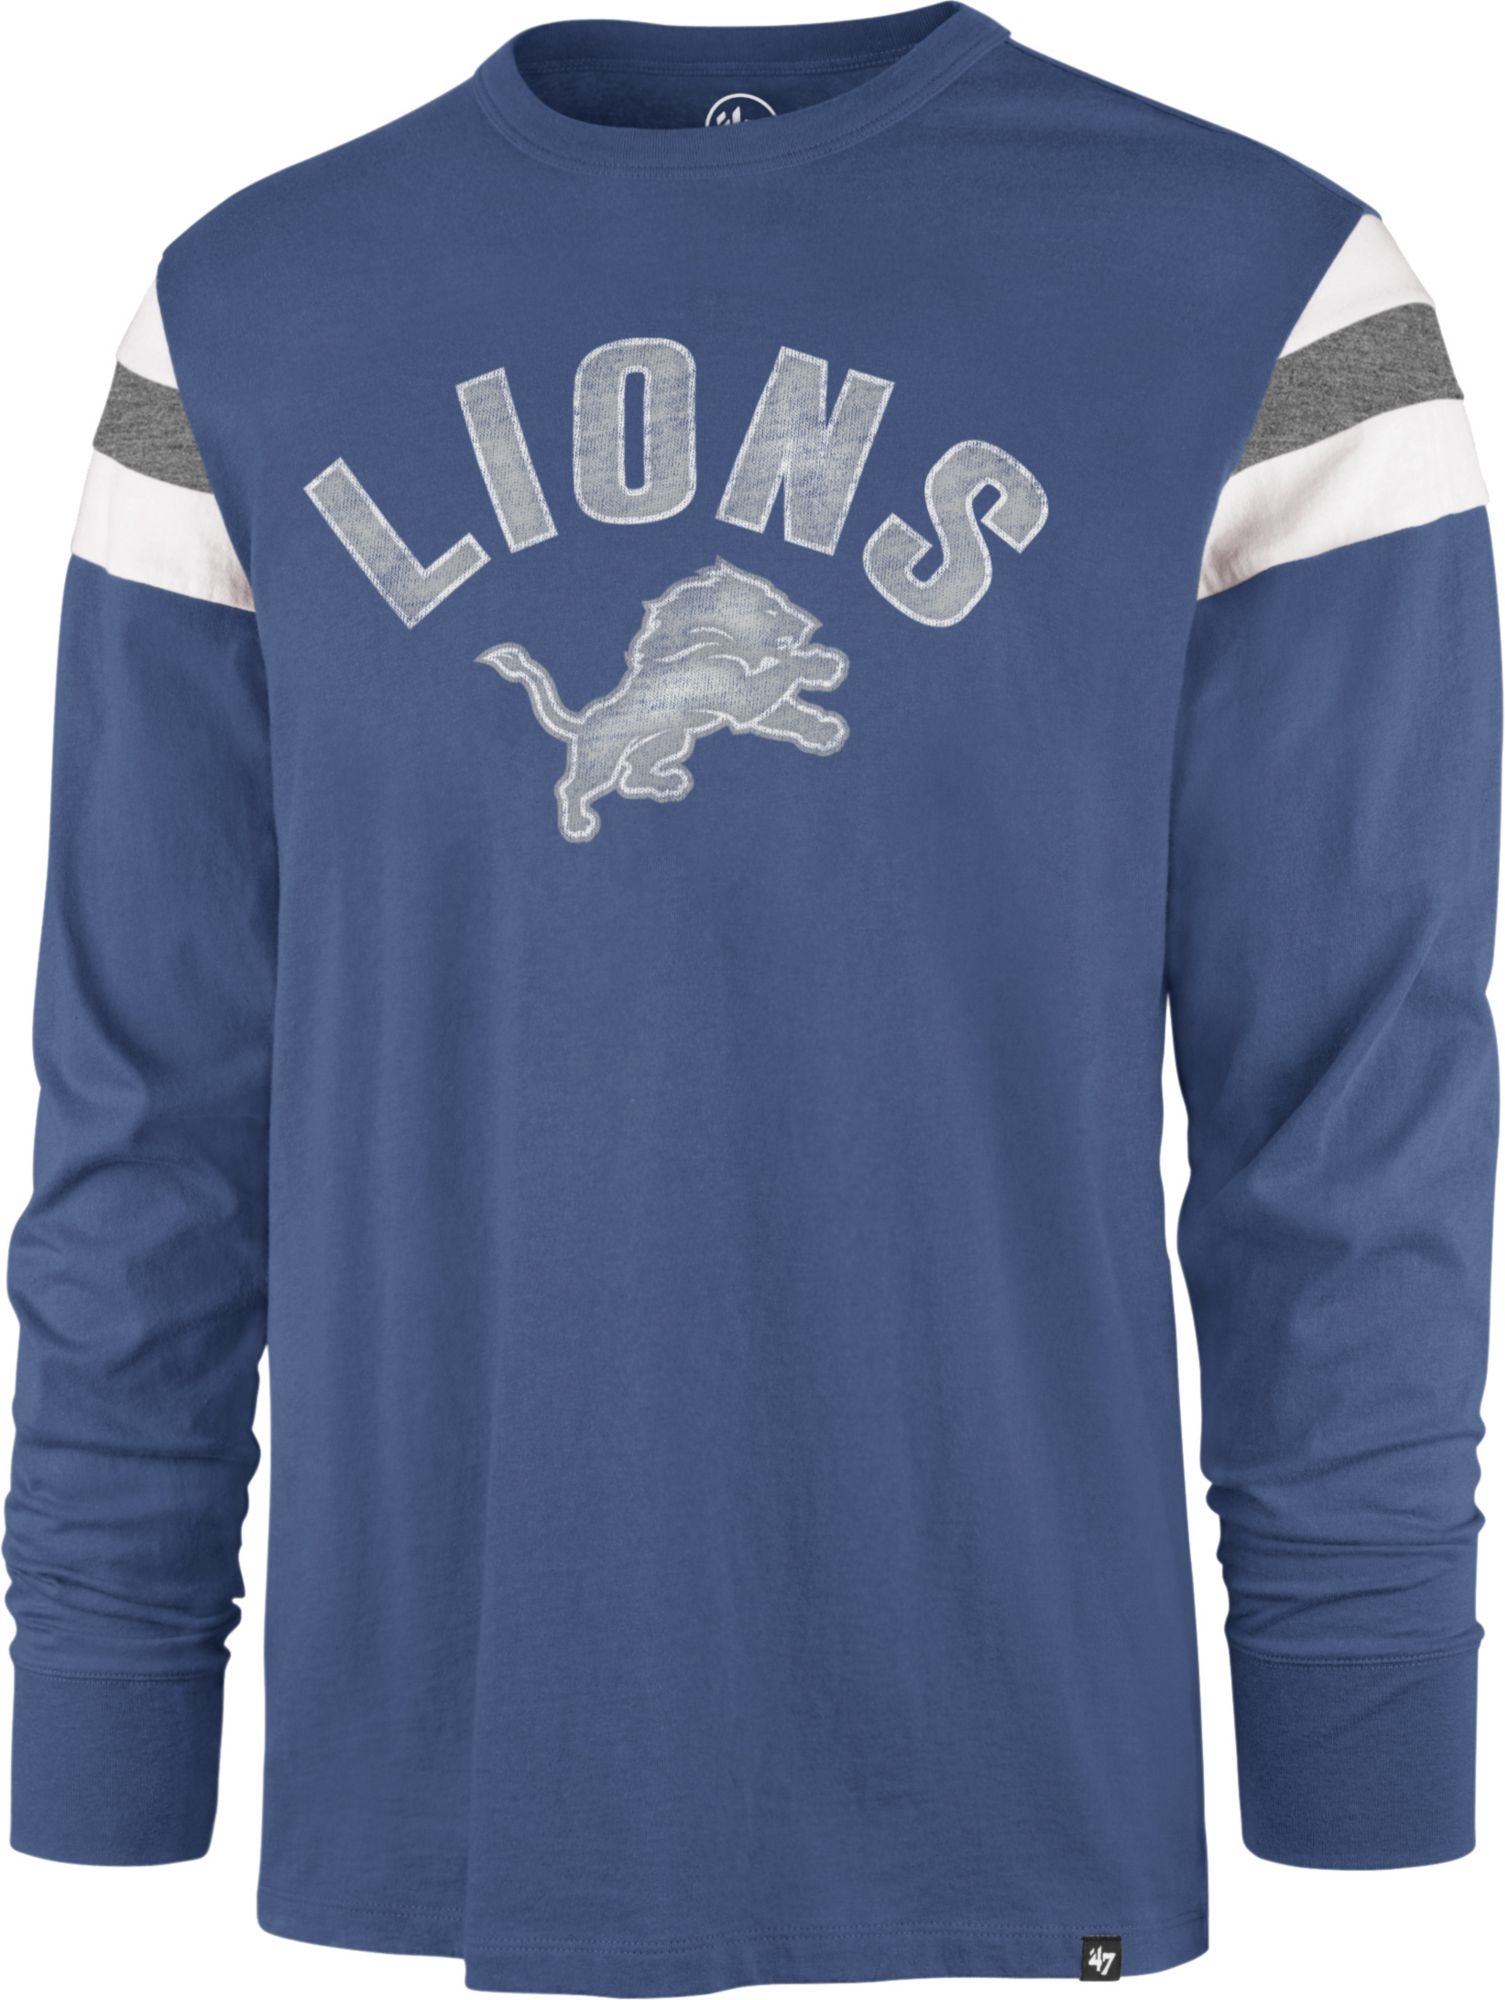 lions long sleeve t shirt